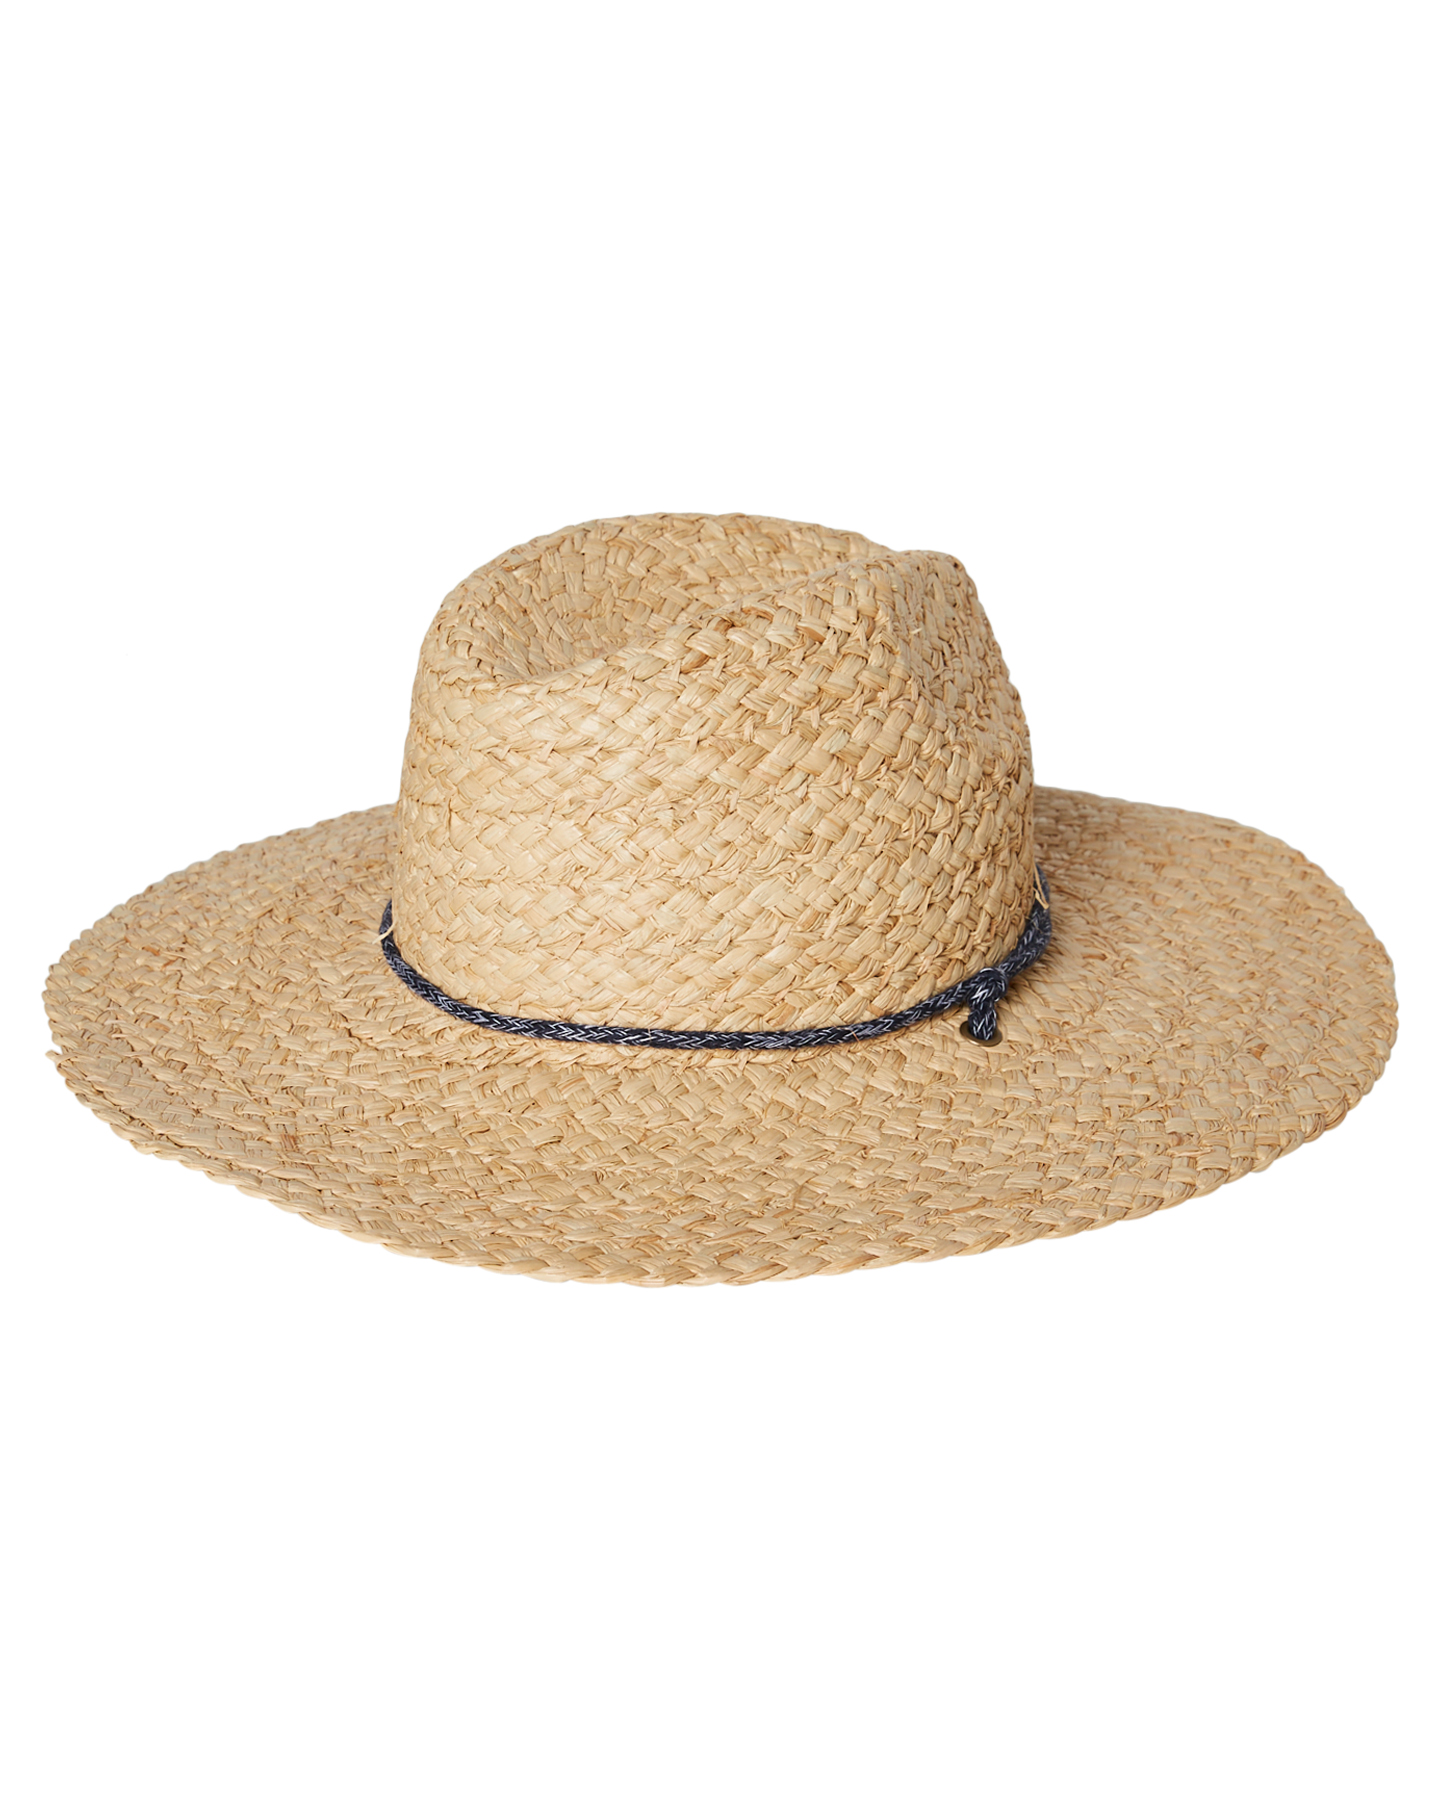 Rip Curl Searchers Straw Panama Hat - Natural | SurfStitch